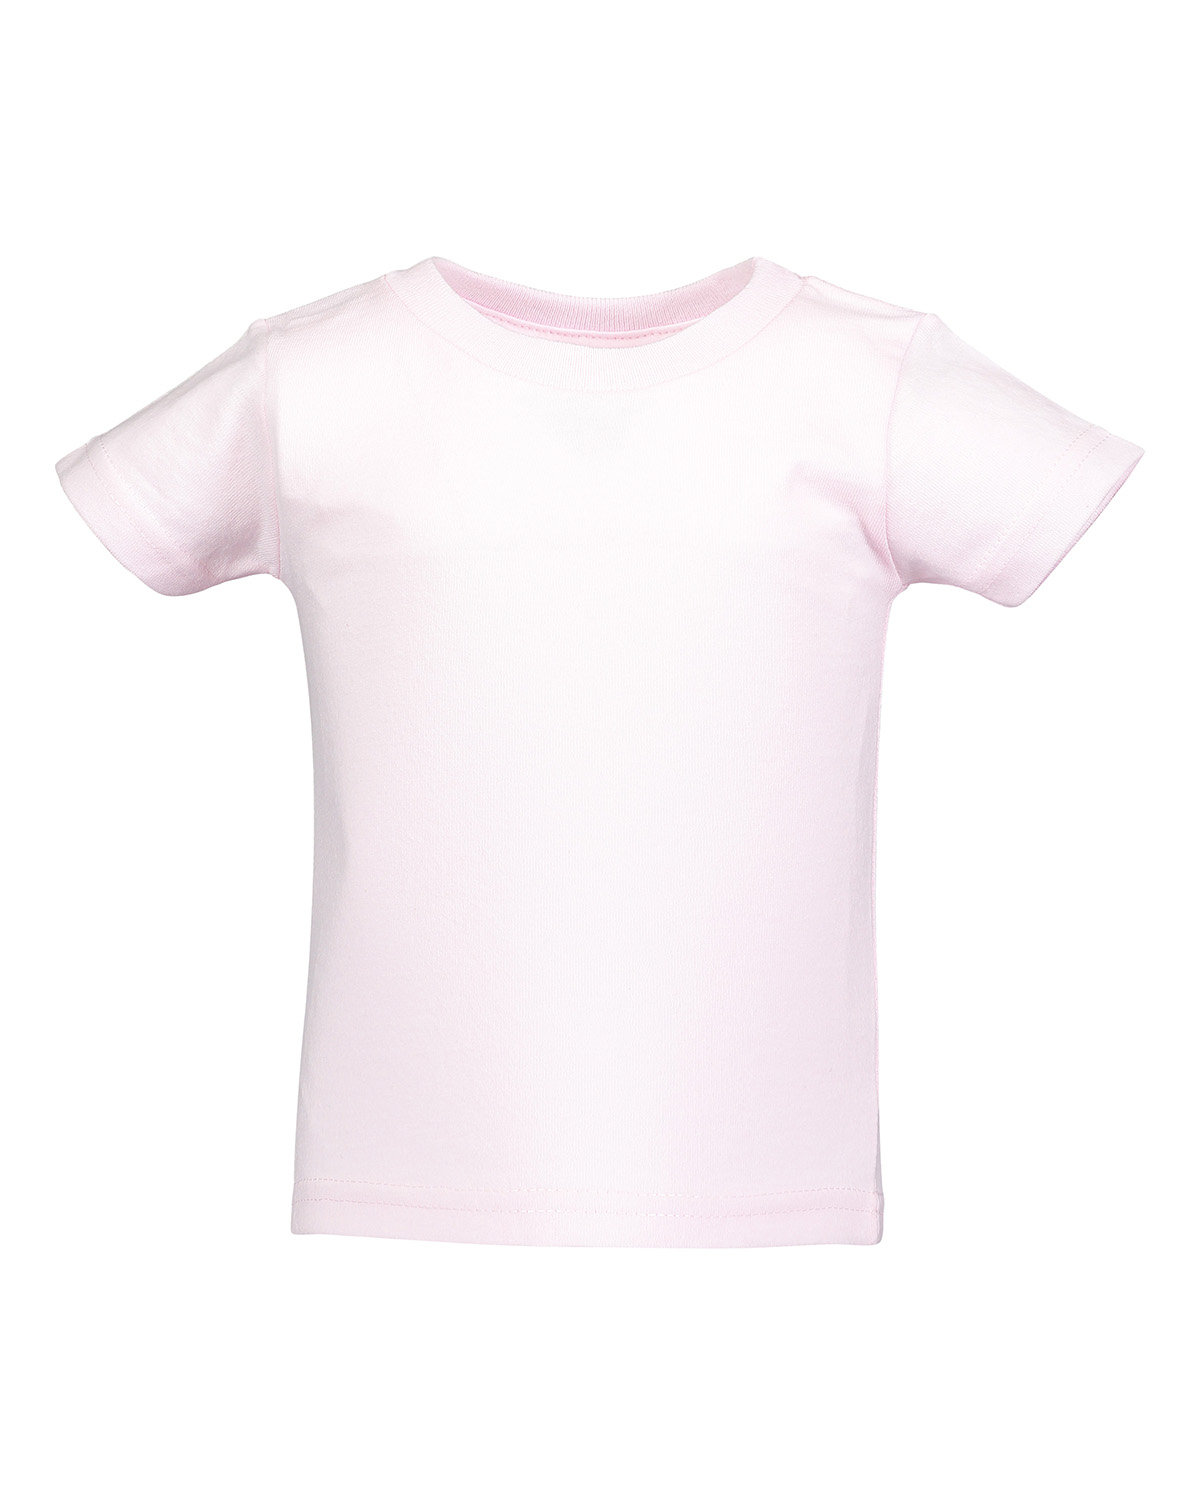 Rabbit Skins Infant Cotton Jersey T-Shirt ballerina 